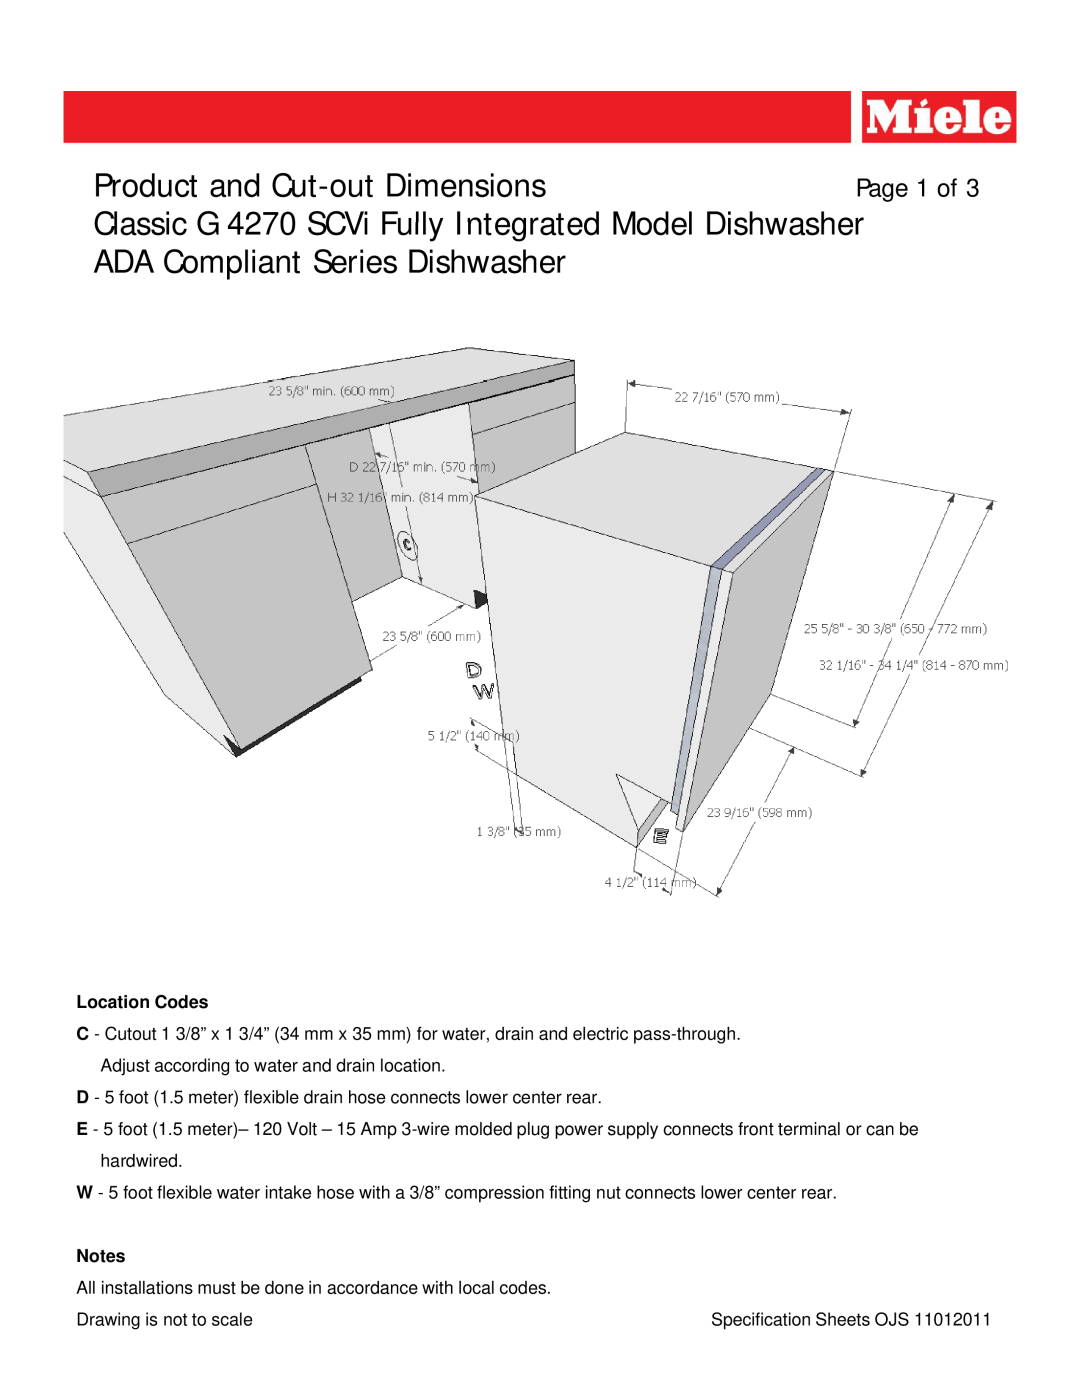 Miele G 4270 SCVI dimensions ADA Compliant Series Dishwasher, Location Codes 